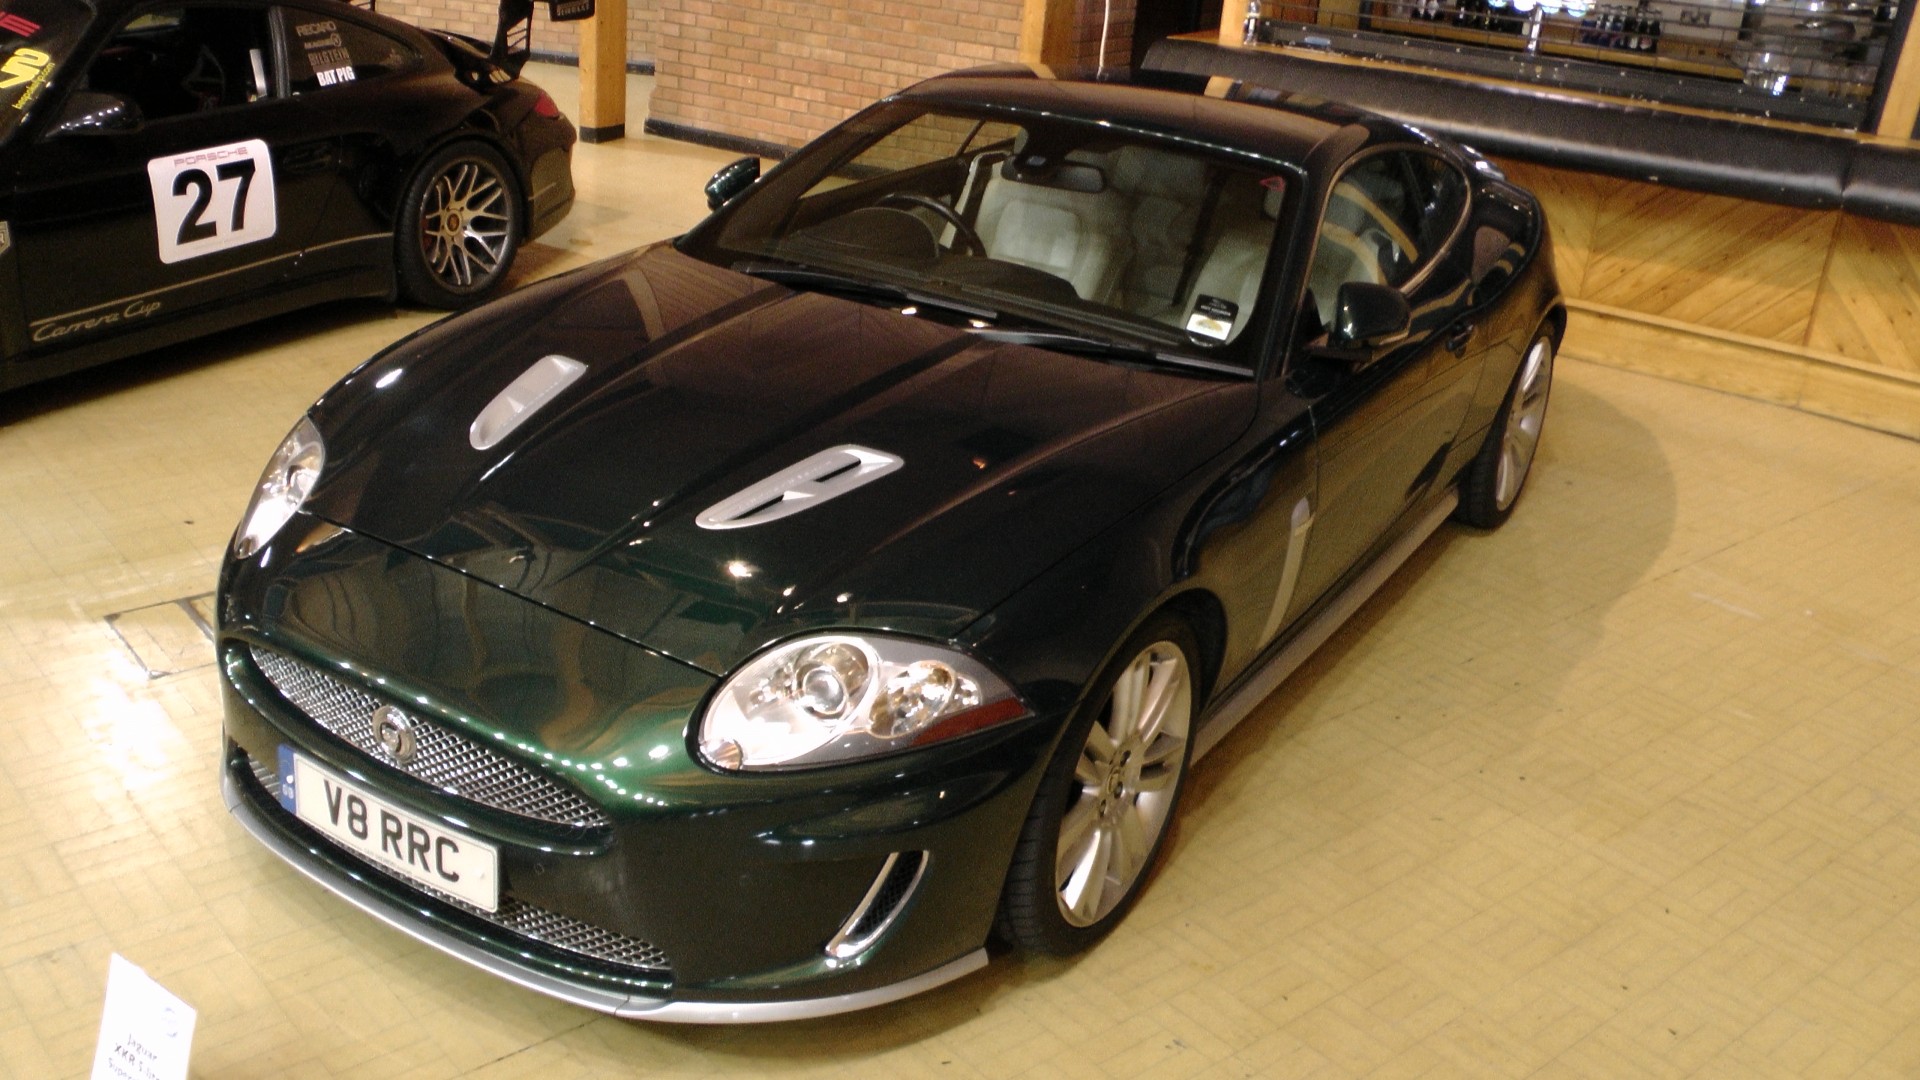 Automobiliai,  Jaguar & Nbsp,  Xkr & Nbsp,  5 Litrų & Nbsp,  Supercharged & Nbsp,  2009,  Jaguar,  Xkr,  Supercharged,  Centras